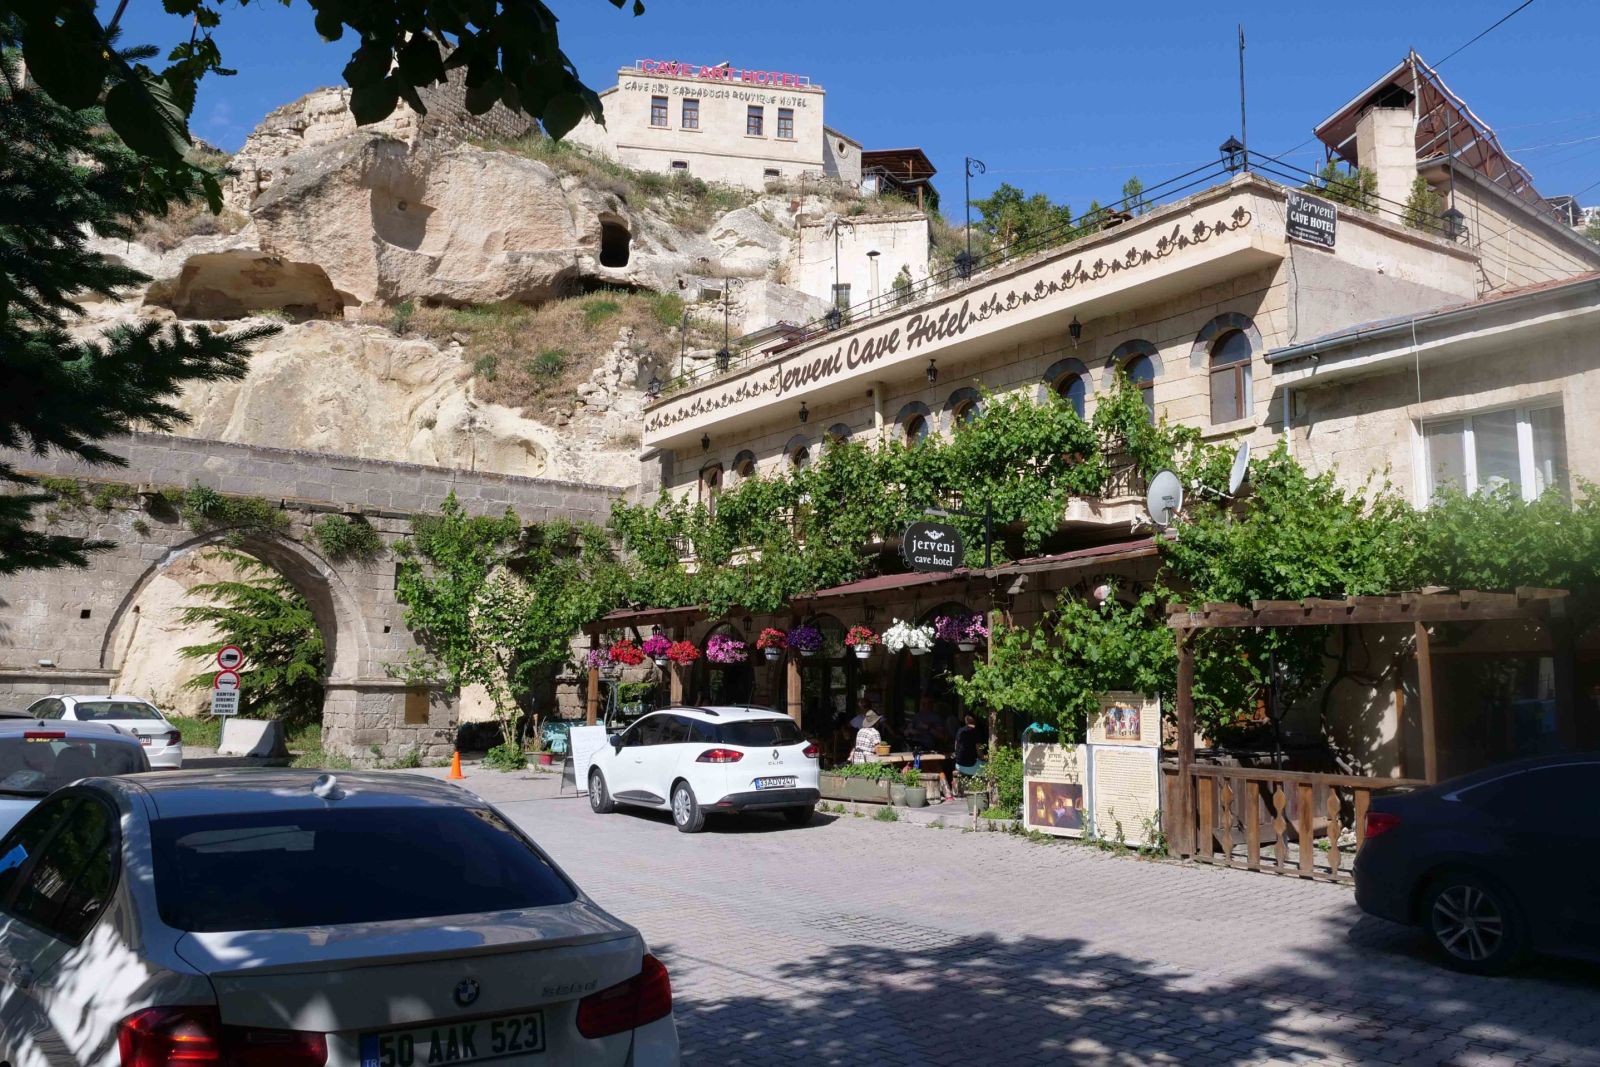 Cerveni Cave Hotel in Mustafapasha